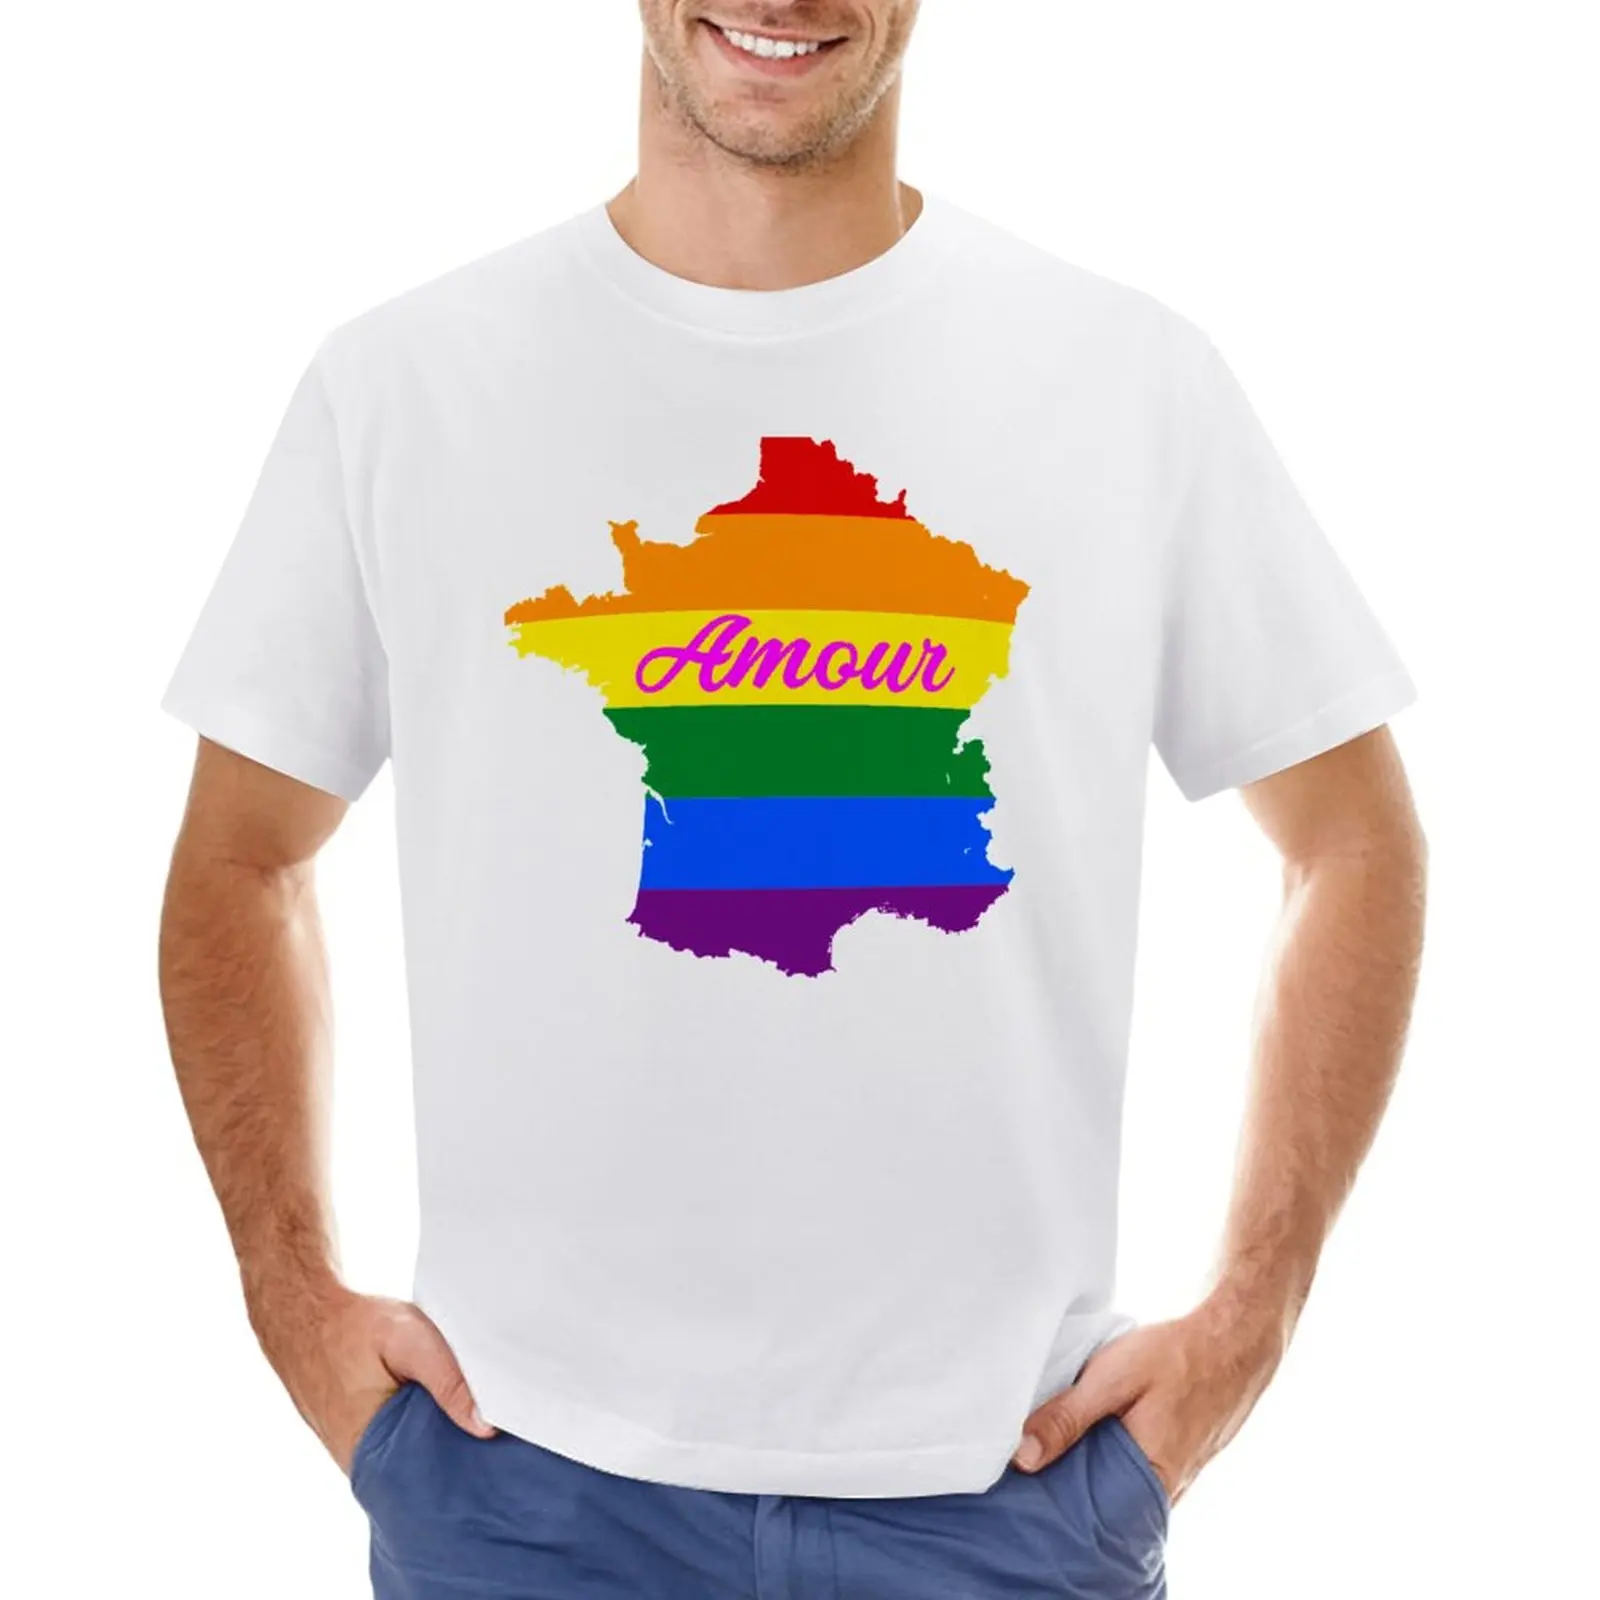 

France Gay Pride Shirt - France Amour LGBT Rainbow Flag Shirt T-Shirt vintage clothes hippie clothes mens t shirt graphic